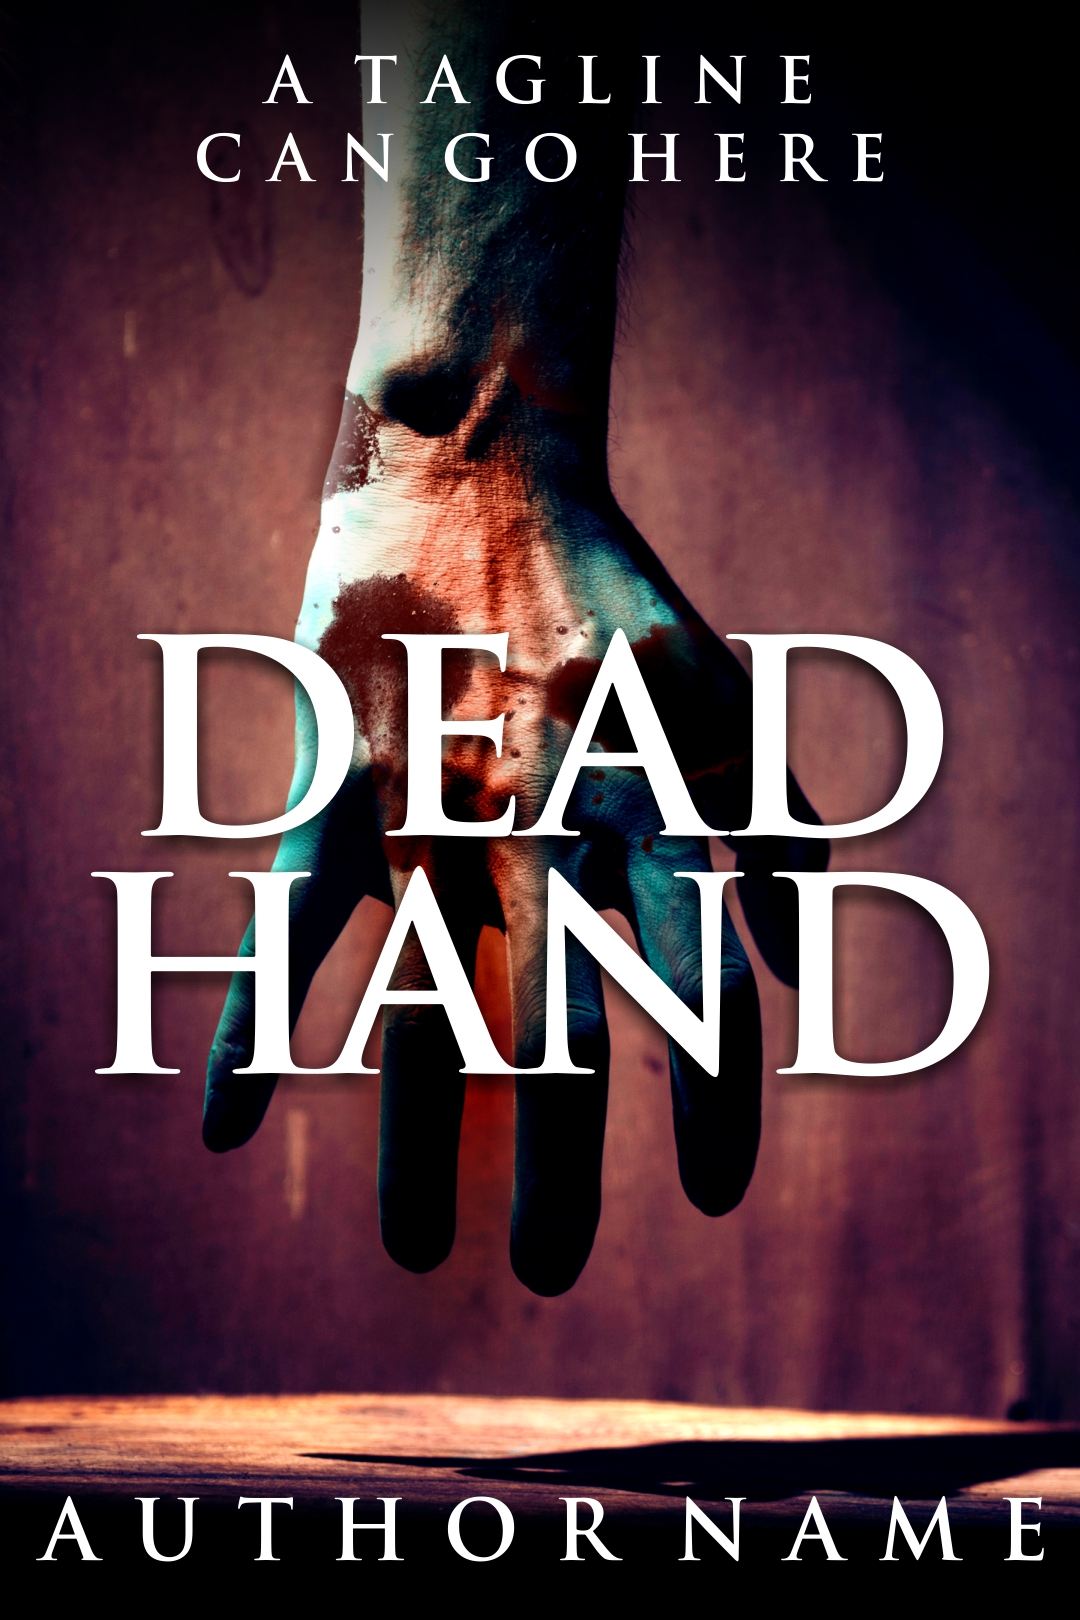 DEAD HAND - The Book Cover Designer